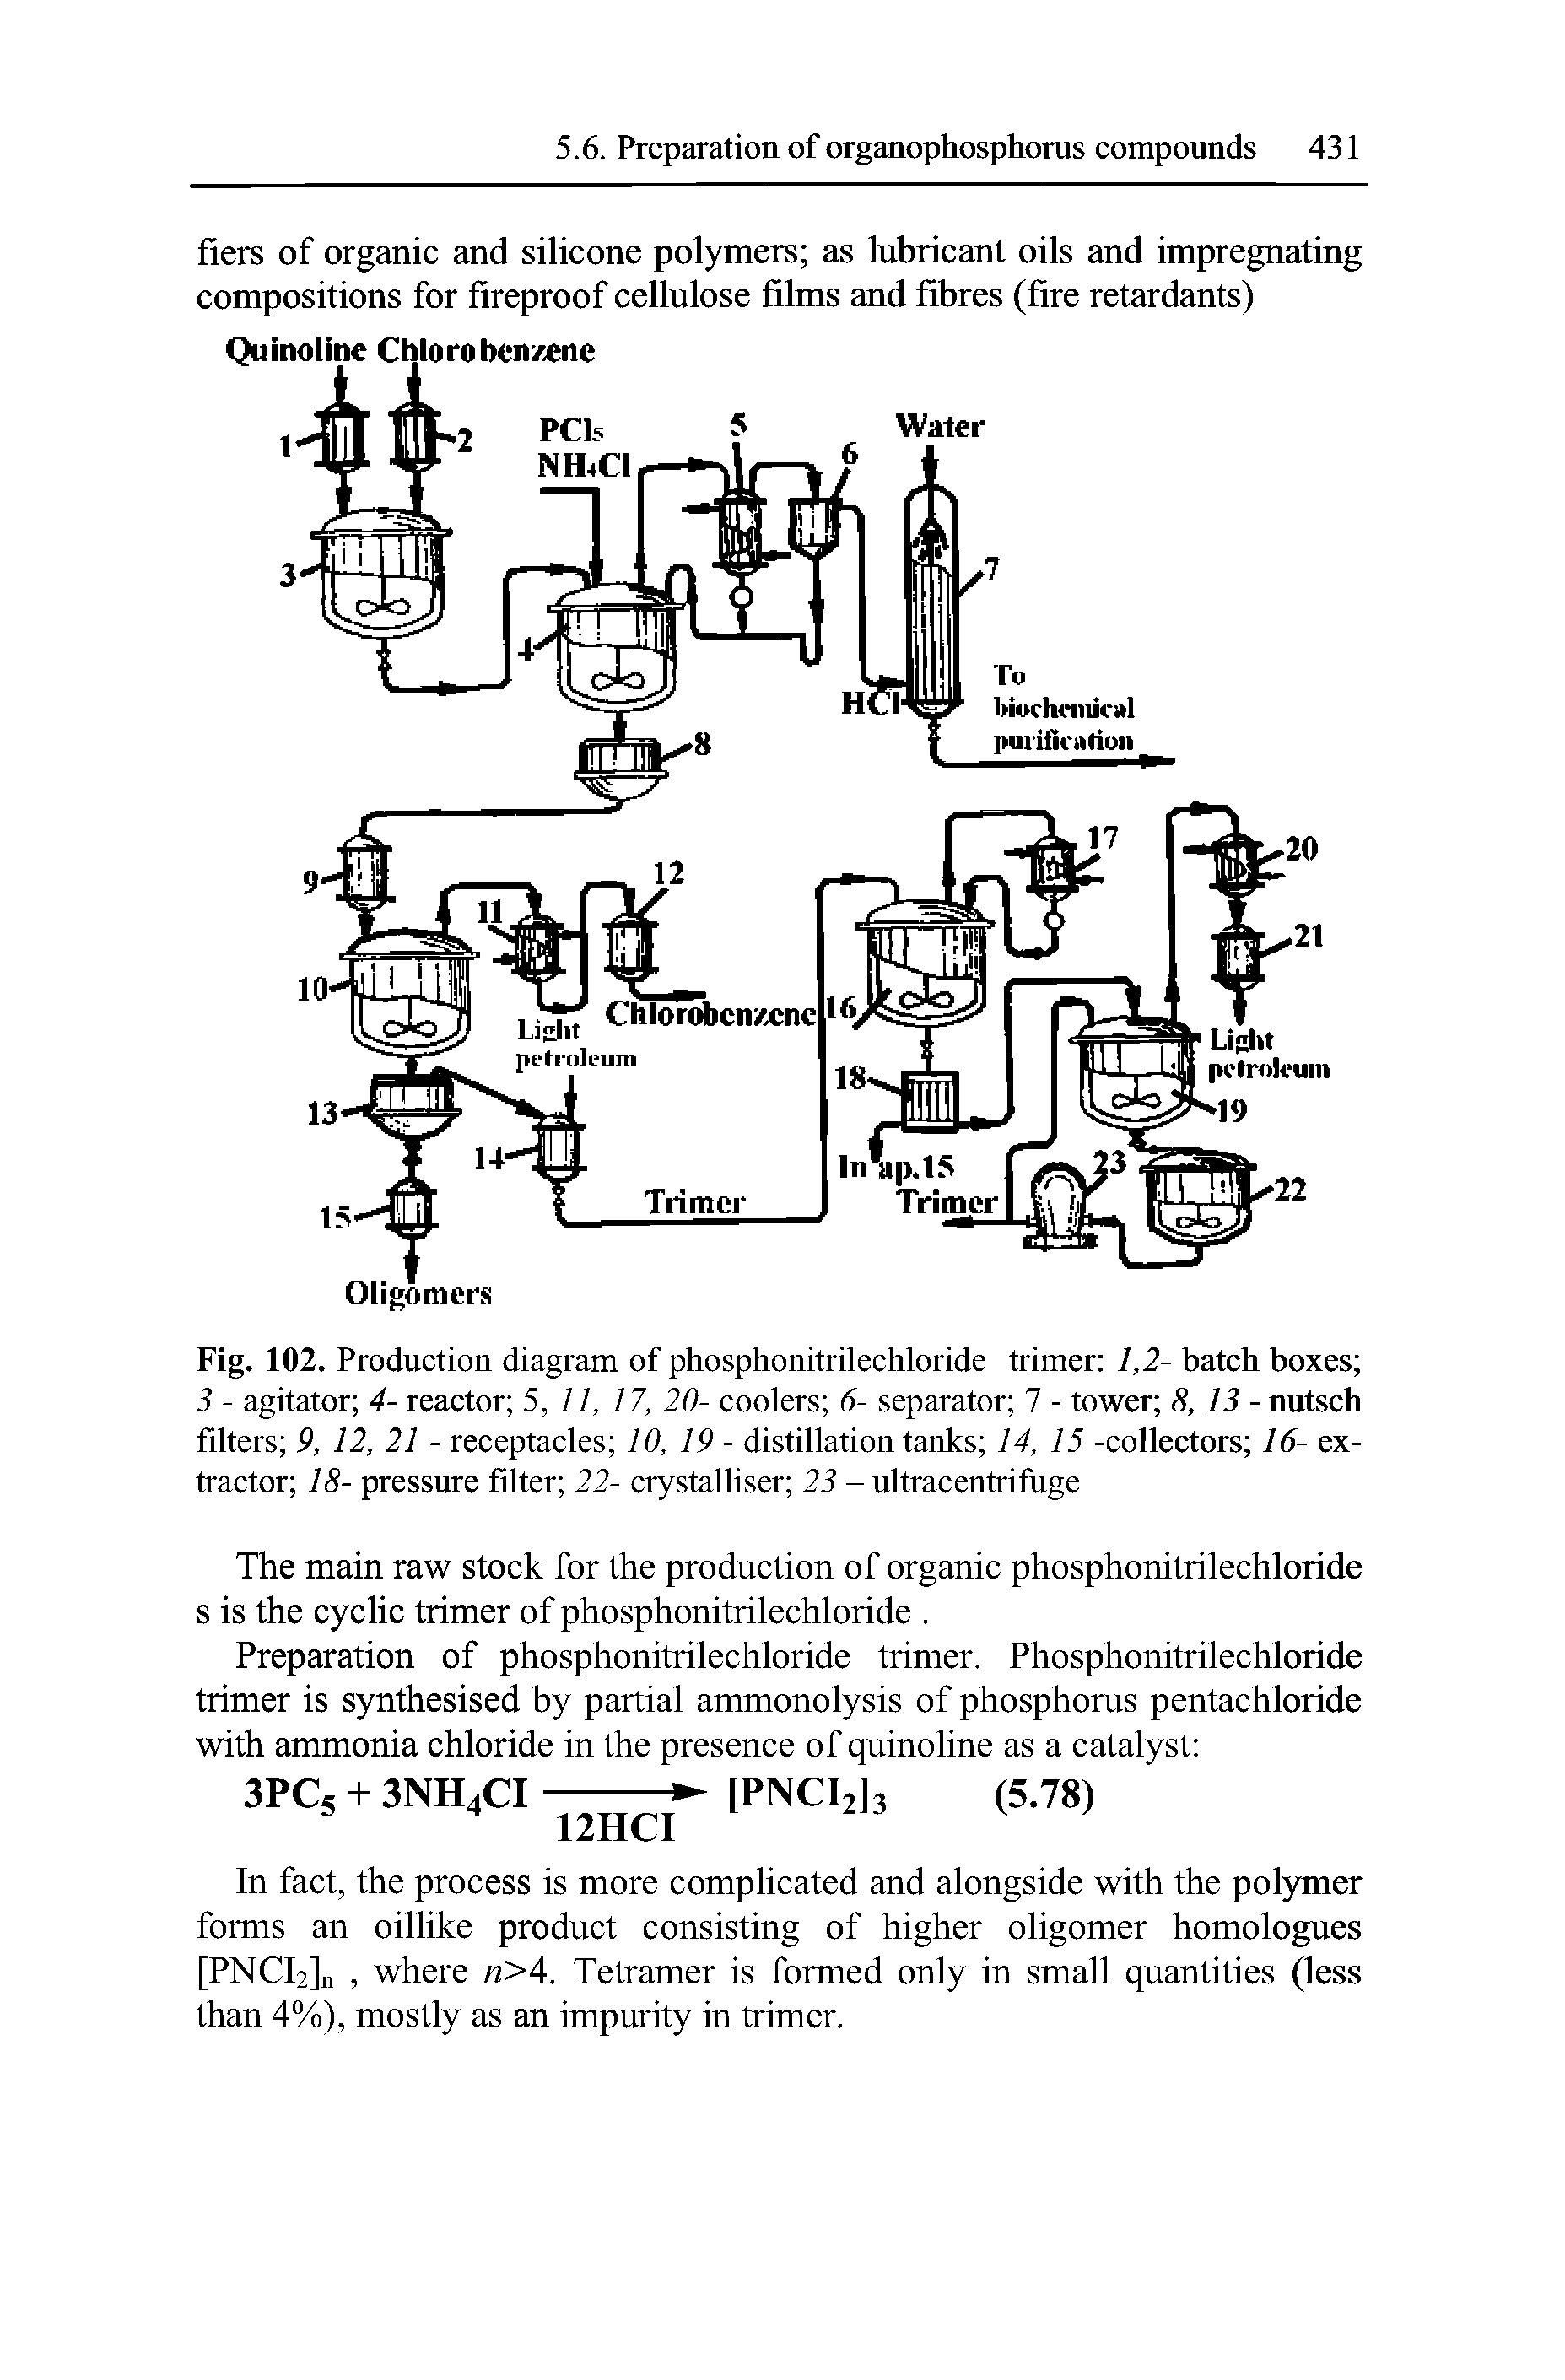 Fig. 102. Production diagram of phosphonitrilechloride trimer 1,2- batch boxes 3 - agitator 4- reactor 5, 11, 17, 20- coolers 6- separator 7 - tower 8, 13 - nutsch filters 9, 12, 21 - receptacles 10, 19 - distillation tanks 14, 15 -collectors 16- extractor 18- pressure filter 22- crystalliser 23 - ultracentrifuge...